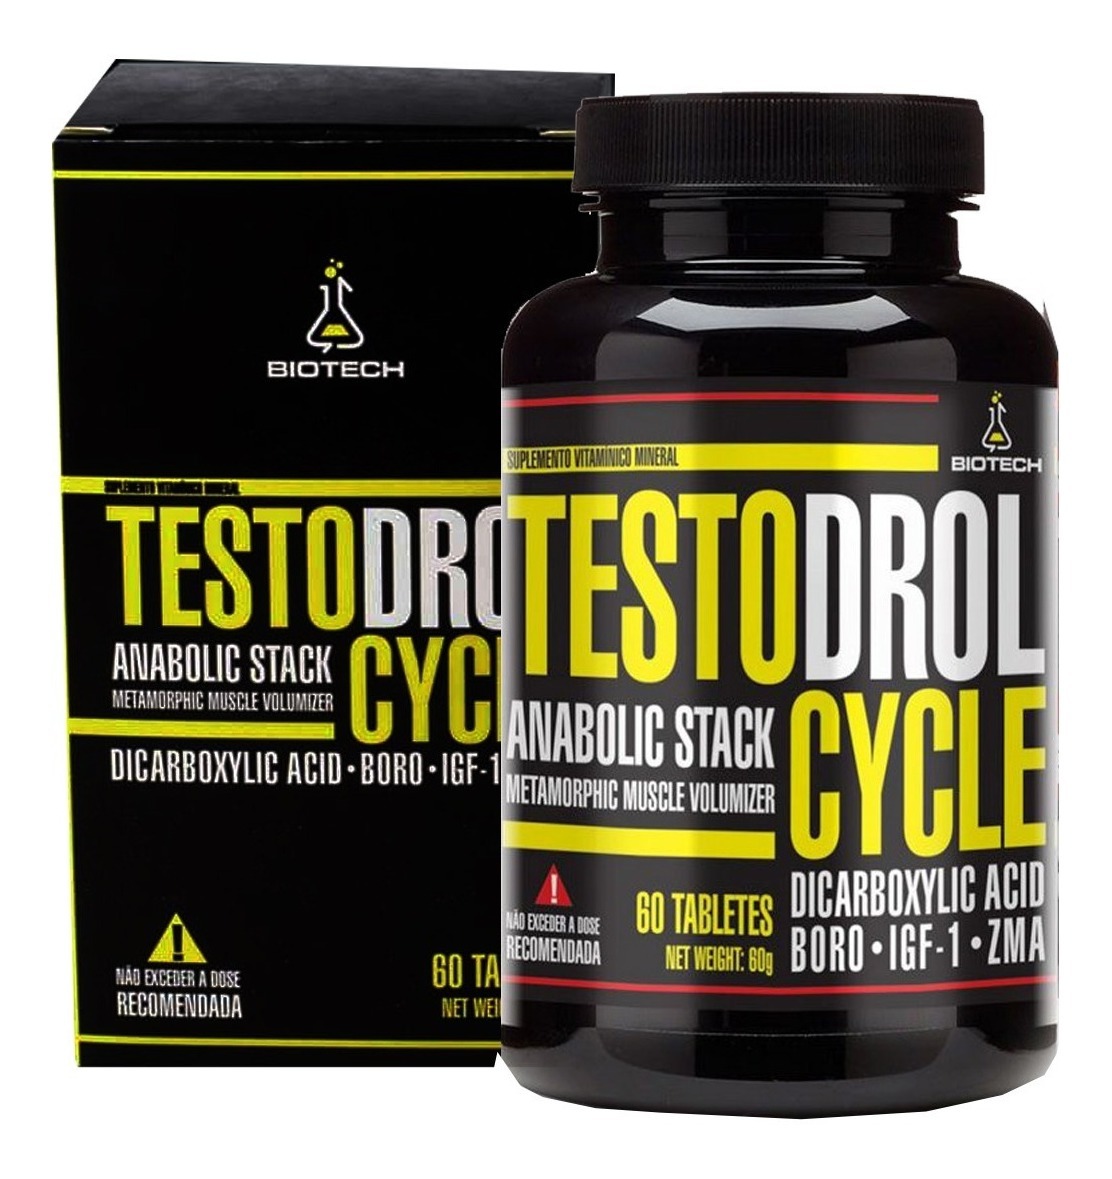 Testosterona Suplemento Natural Testodrol Envio - $ 1.200,00 en Mercado